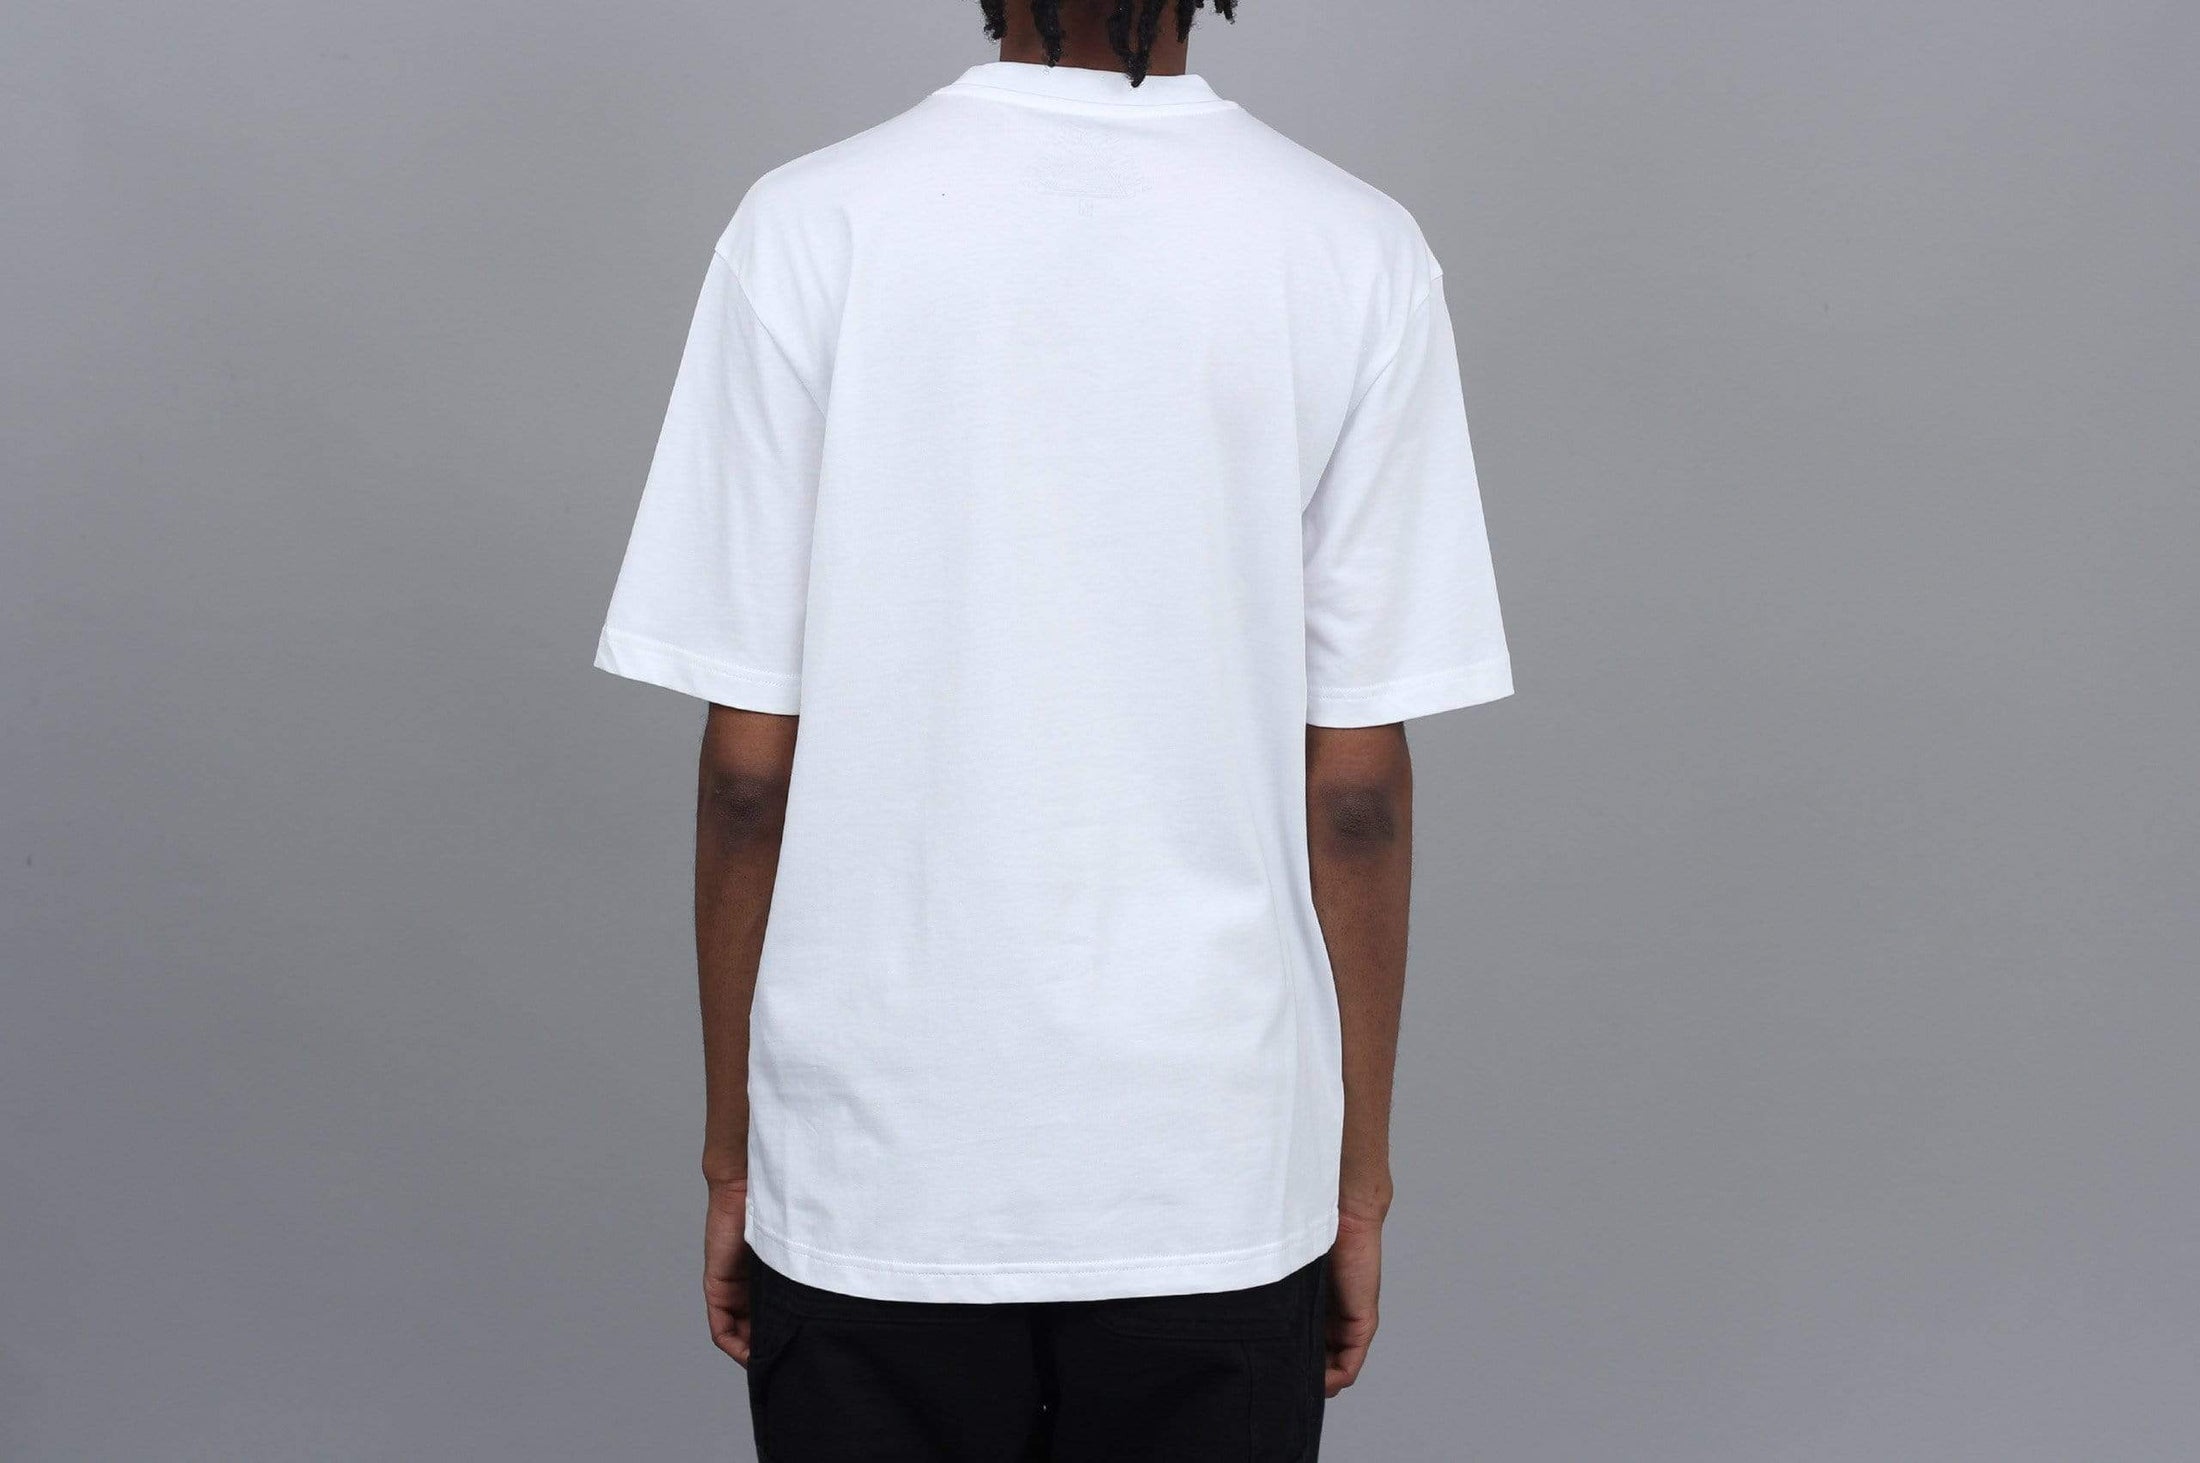 Palace P-Flex T-Shirt White